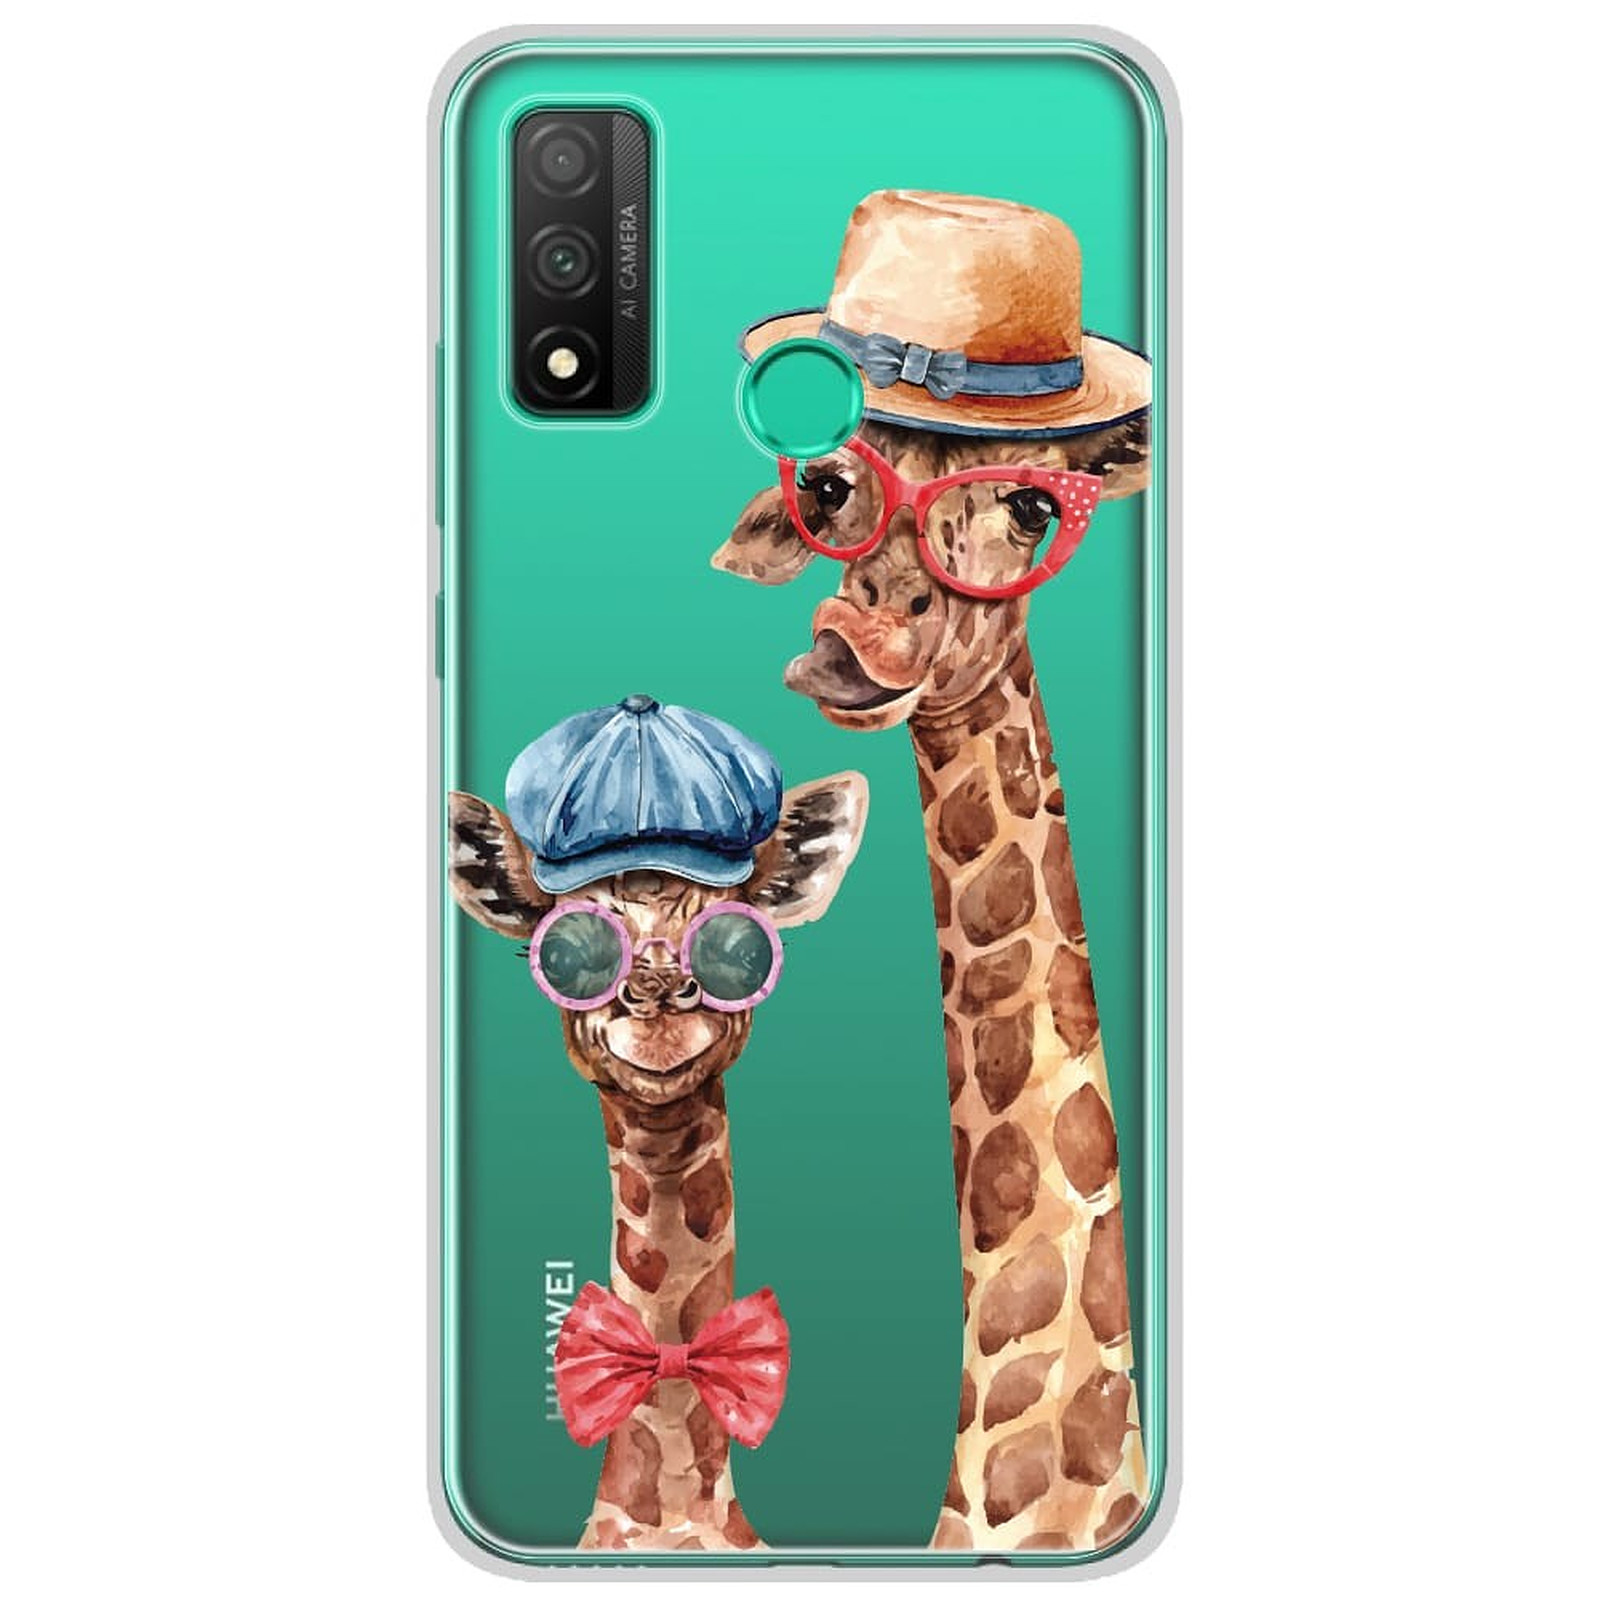 1001 Coques Coque silicone gel Huawei P Smart 2020 motif Funny Girafe - Coque telephone 1001Coques